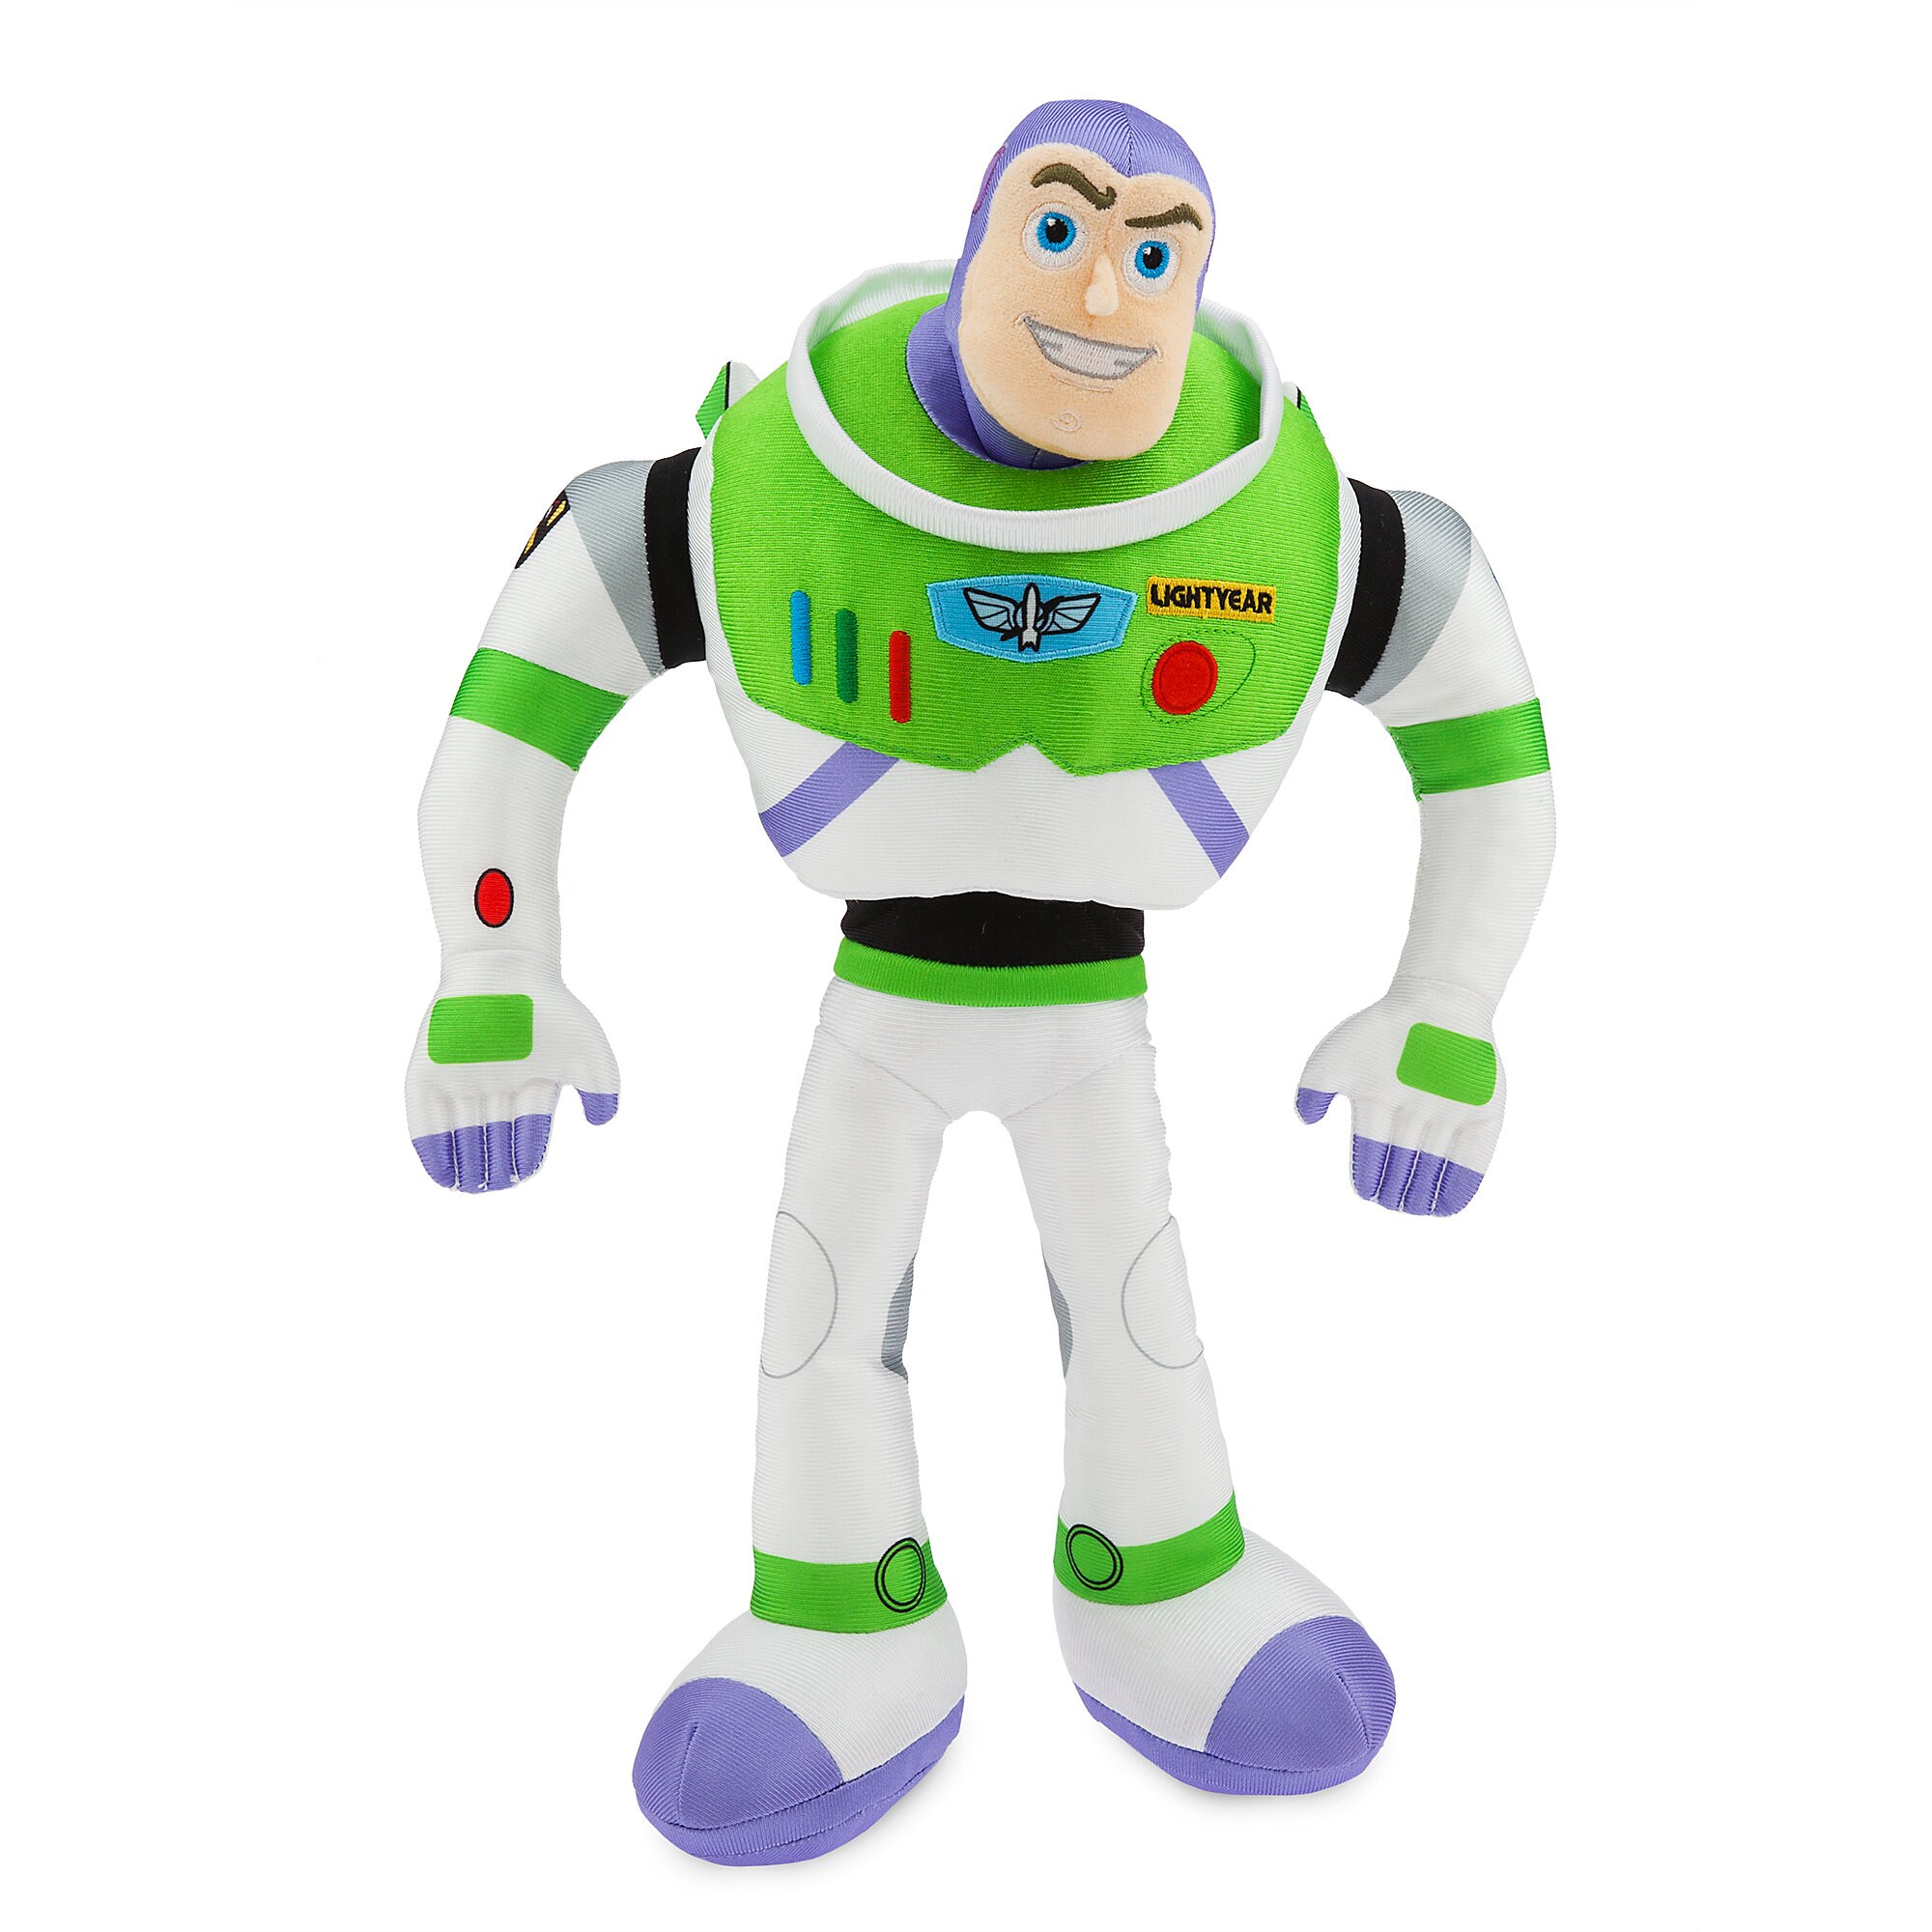 Buzz Lightyear Plush - Toy Story 4 - Medium - 17''